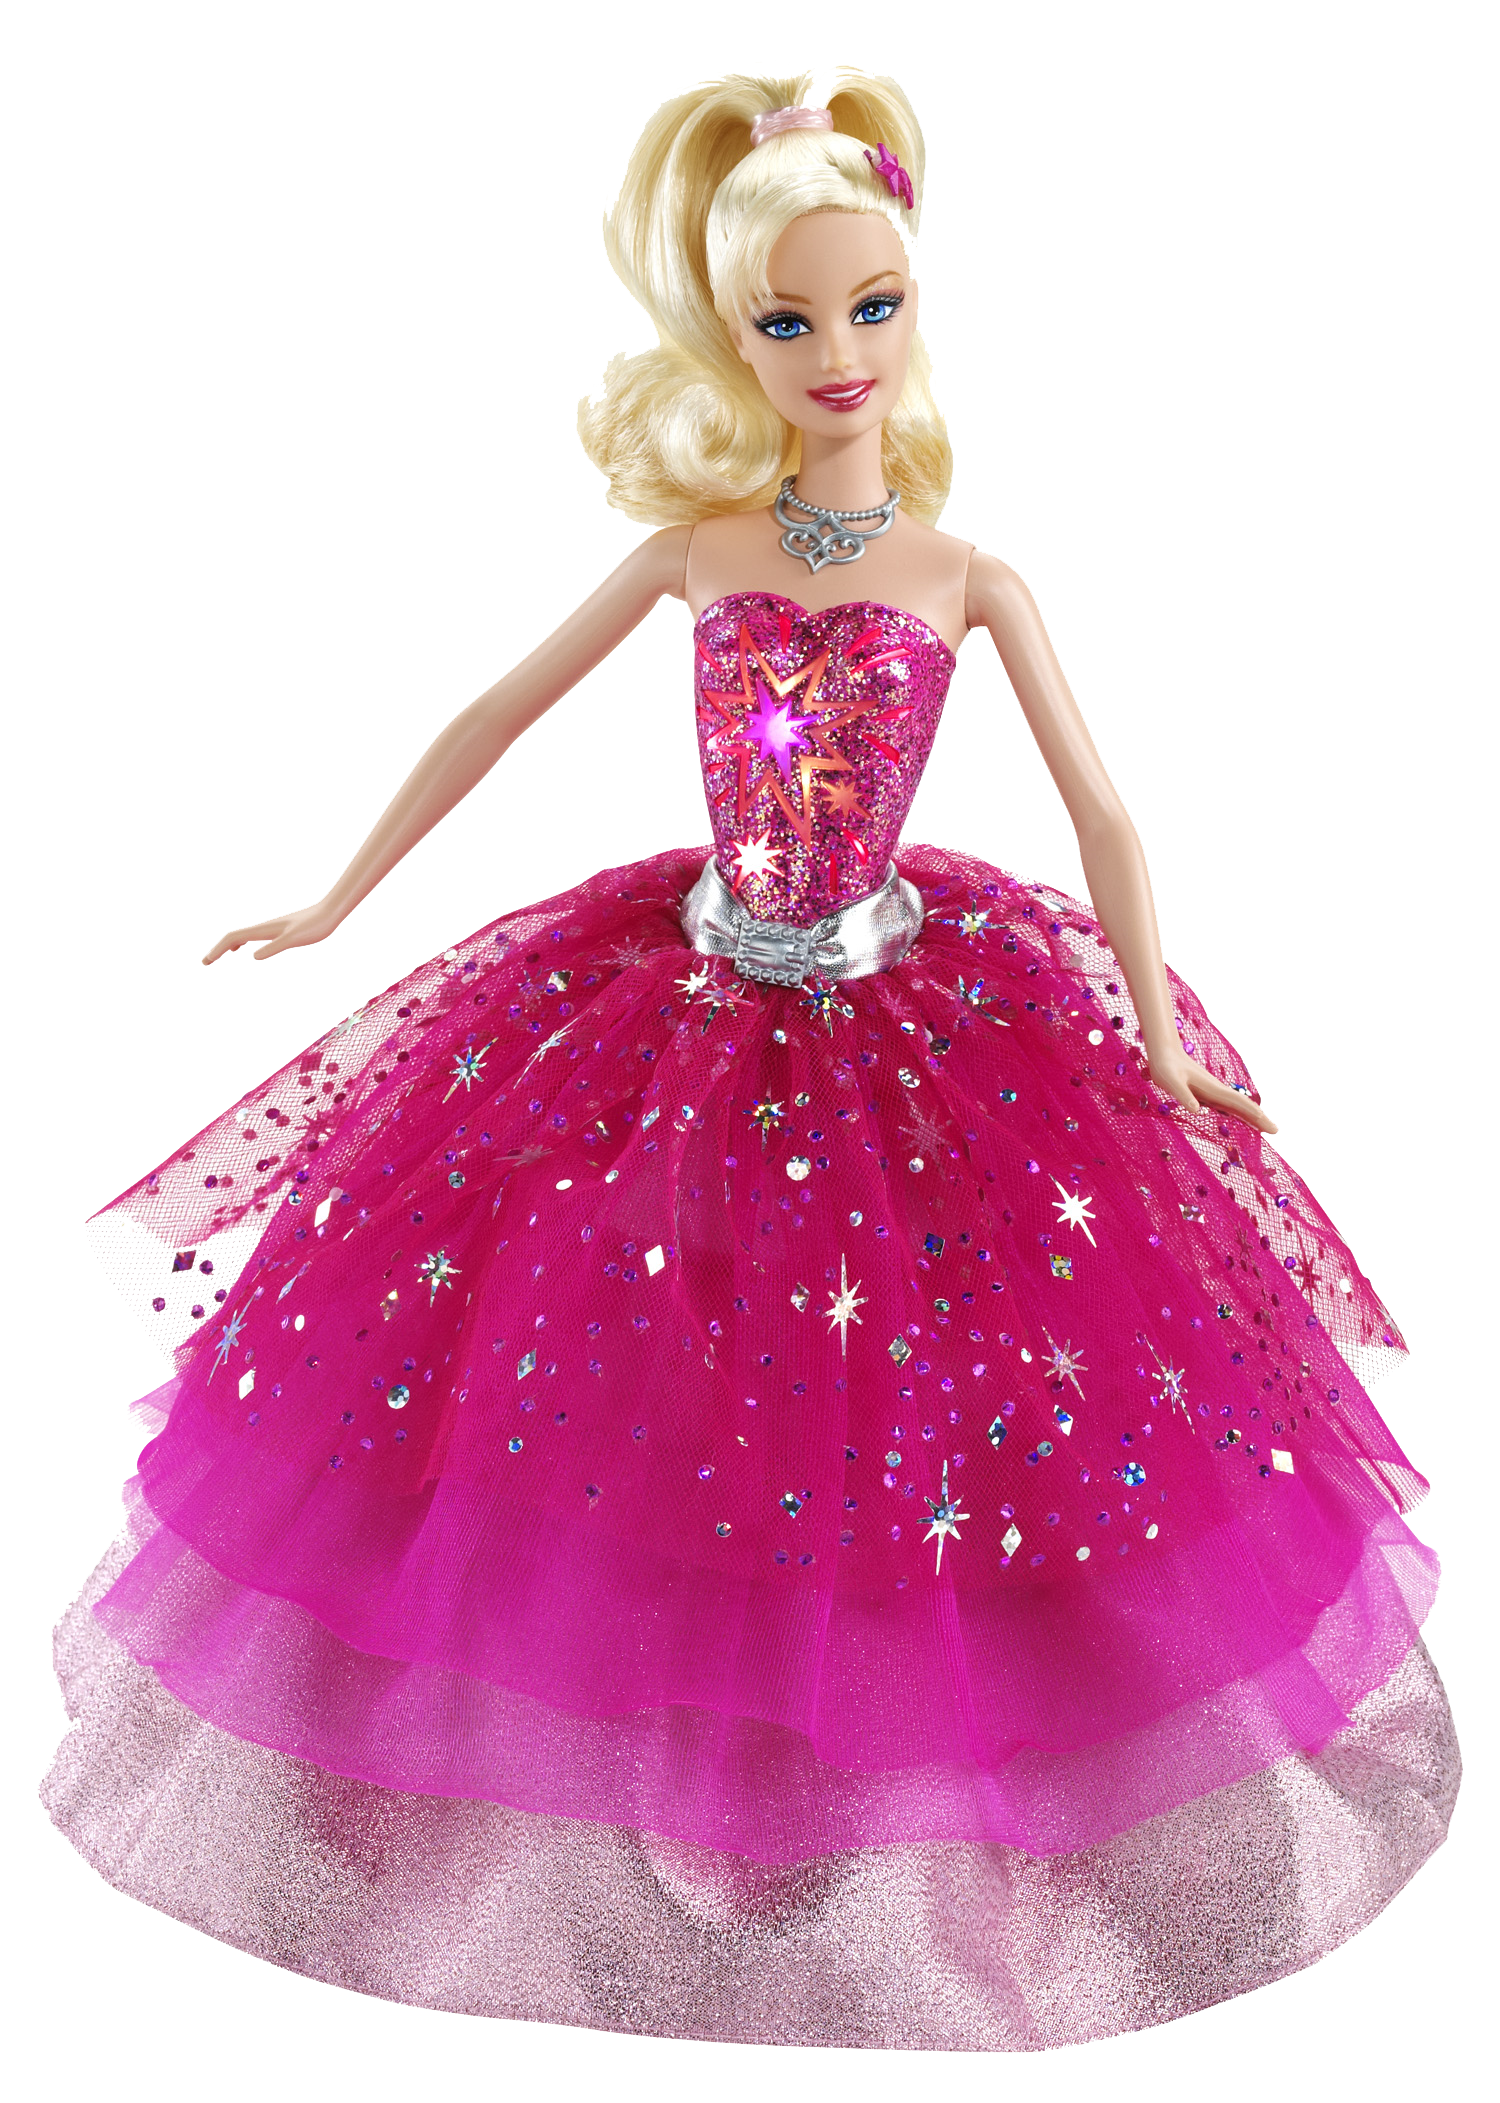 Barbie Doll PNG HD Quality